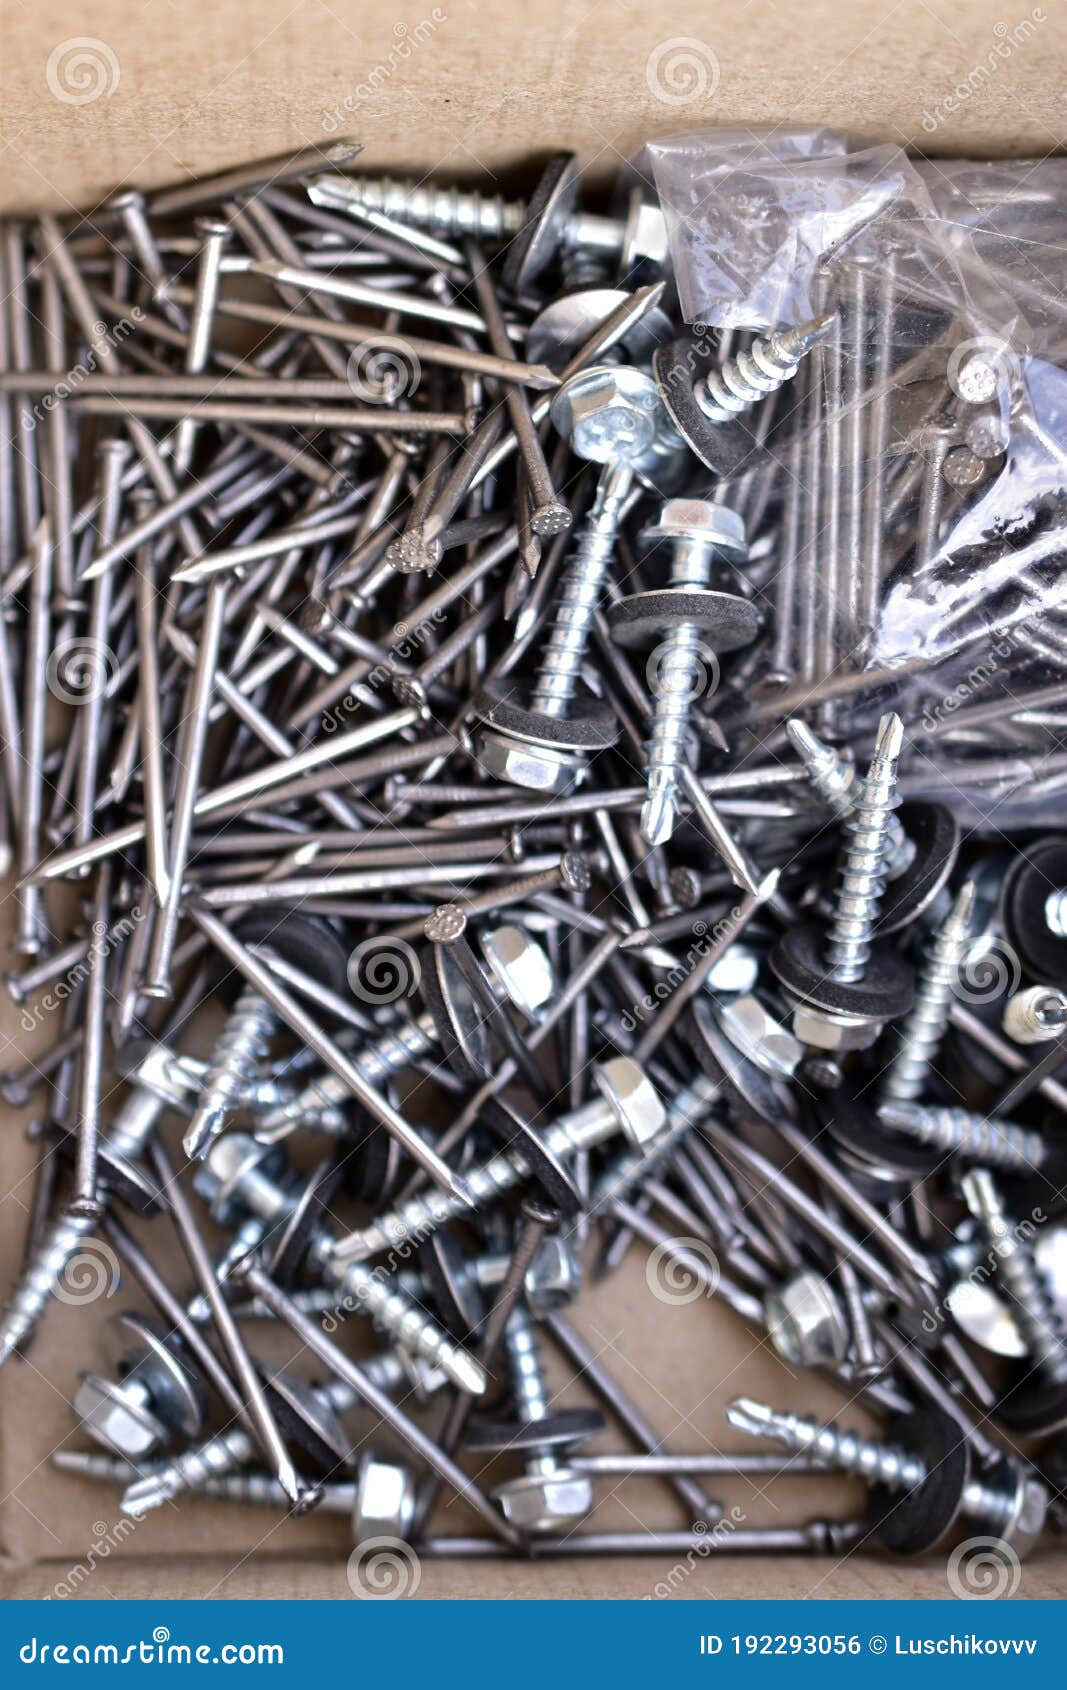 screws, nails isolated on a white background.... - Stock Illustration  [71079729] - PIXTA